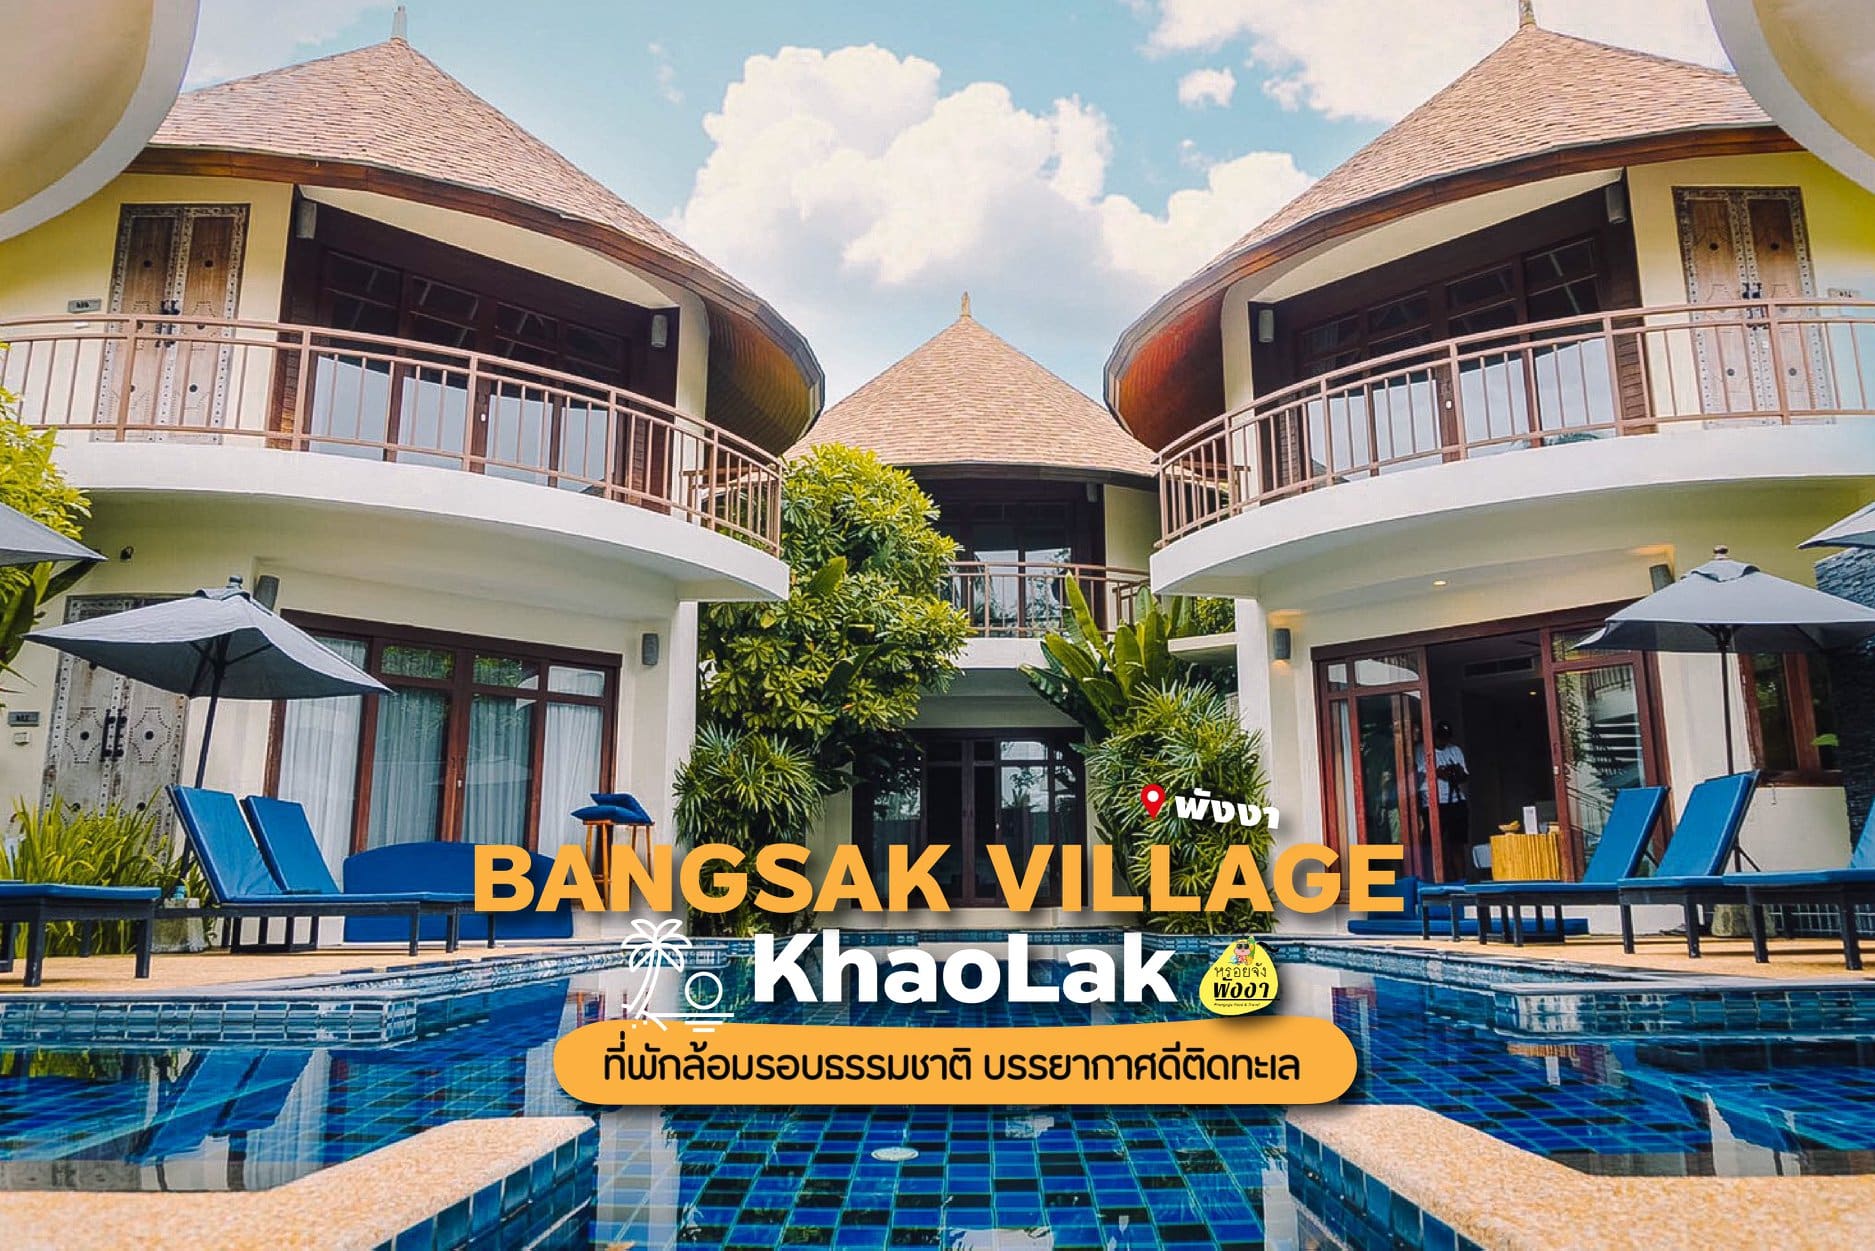 Bangsak Village เขาหลัก พังงา : Khao Lak Phangnga